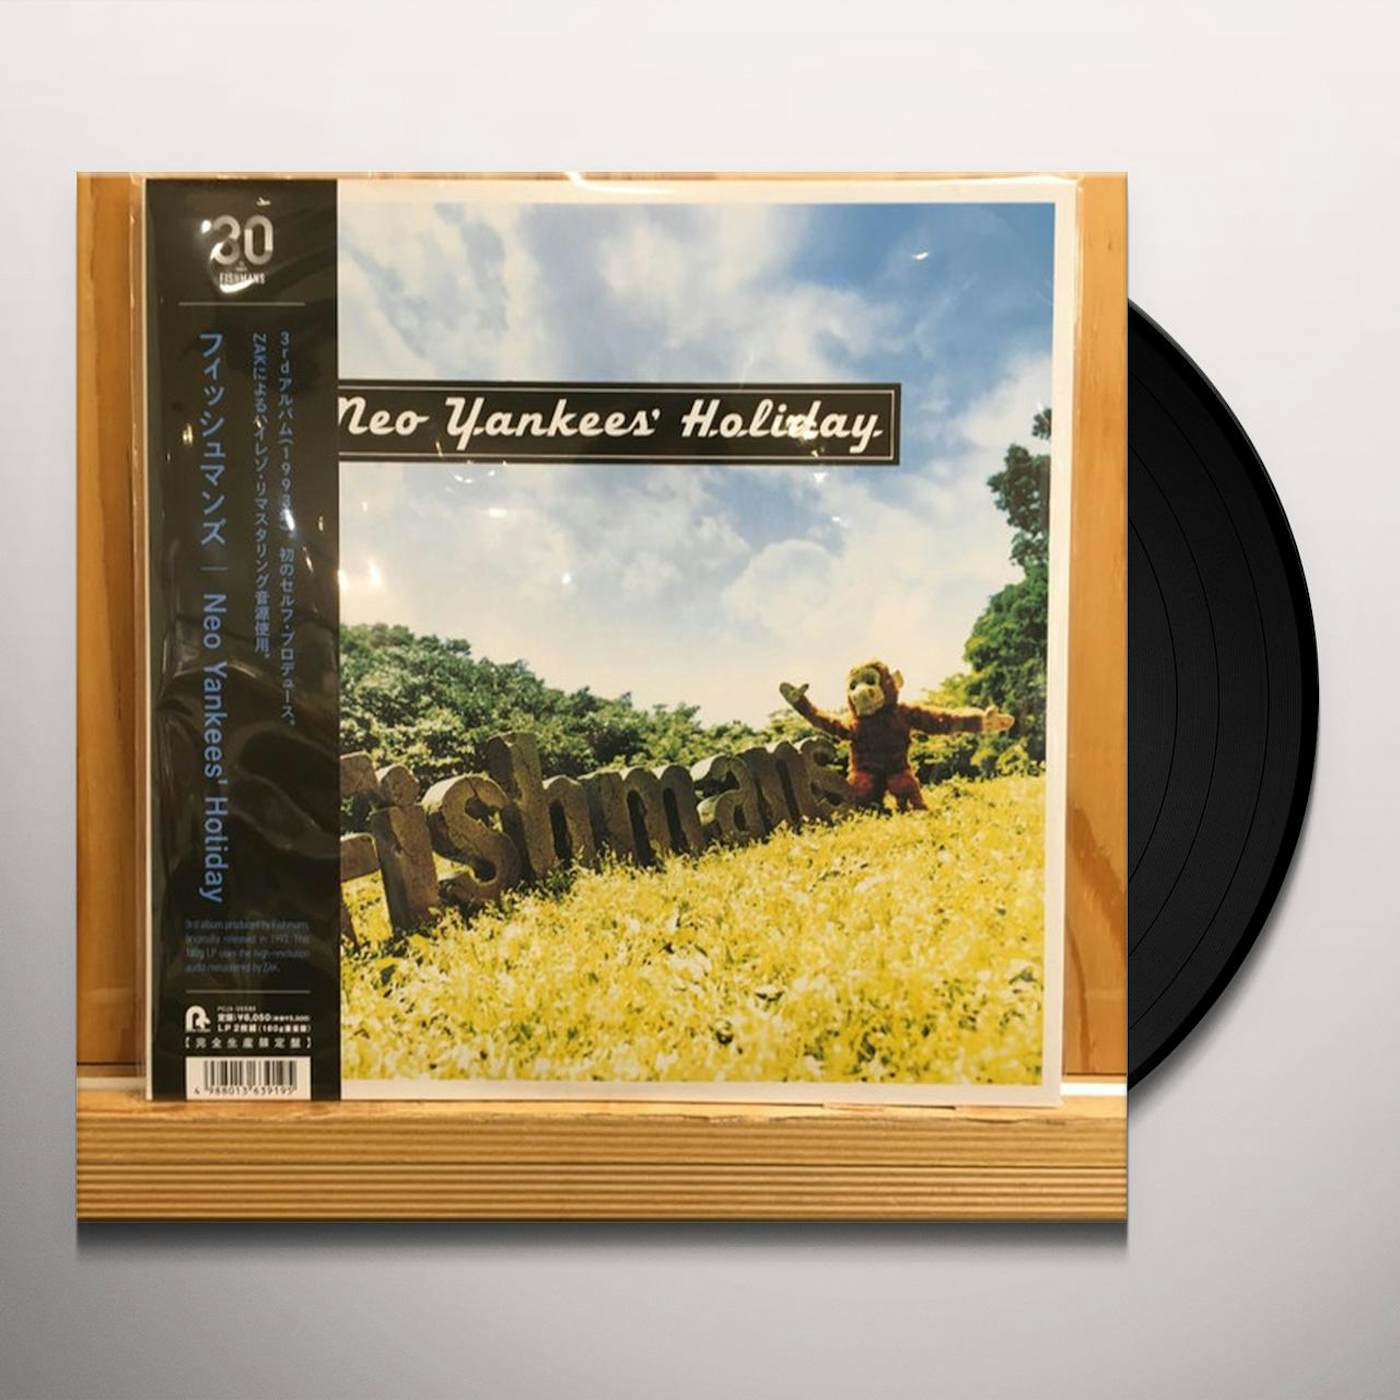 Fishmans NEO YANKEES' HOLIDAY Vinyl Record